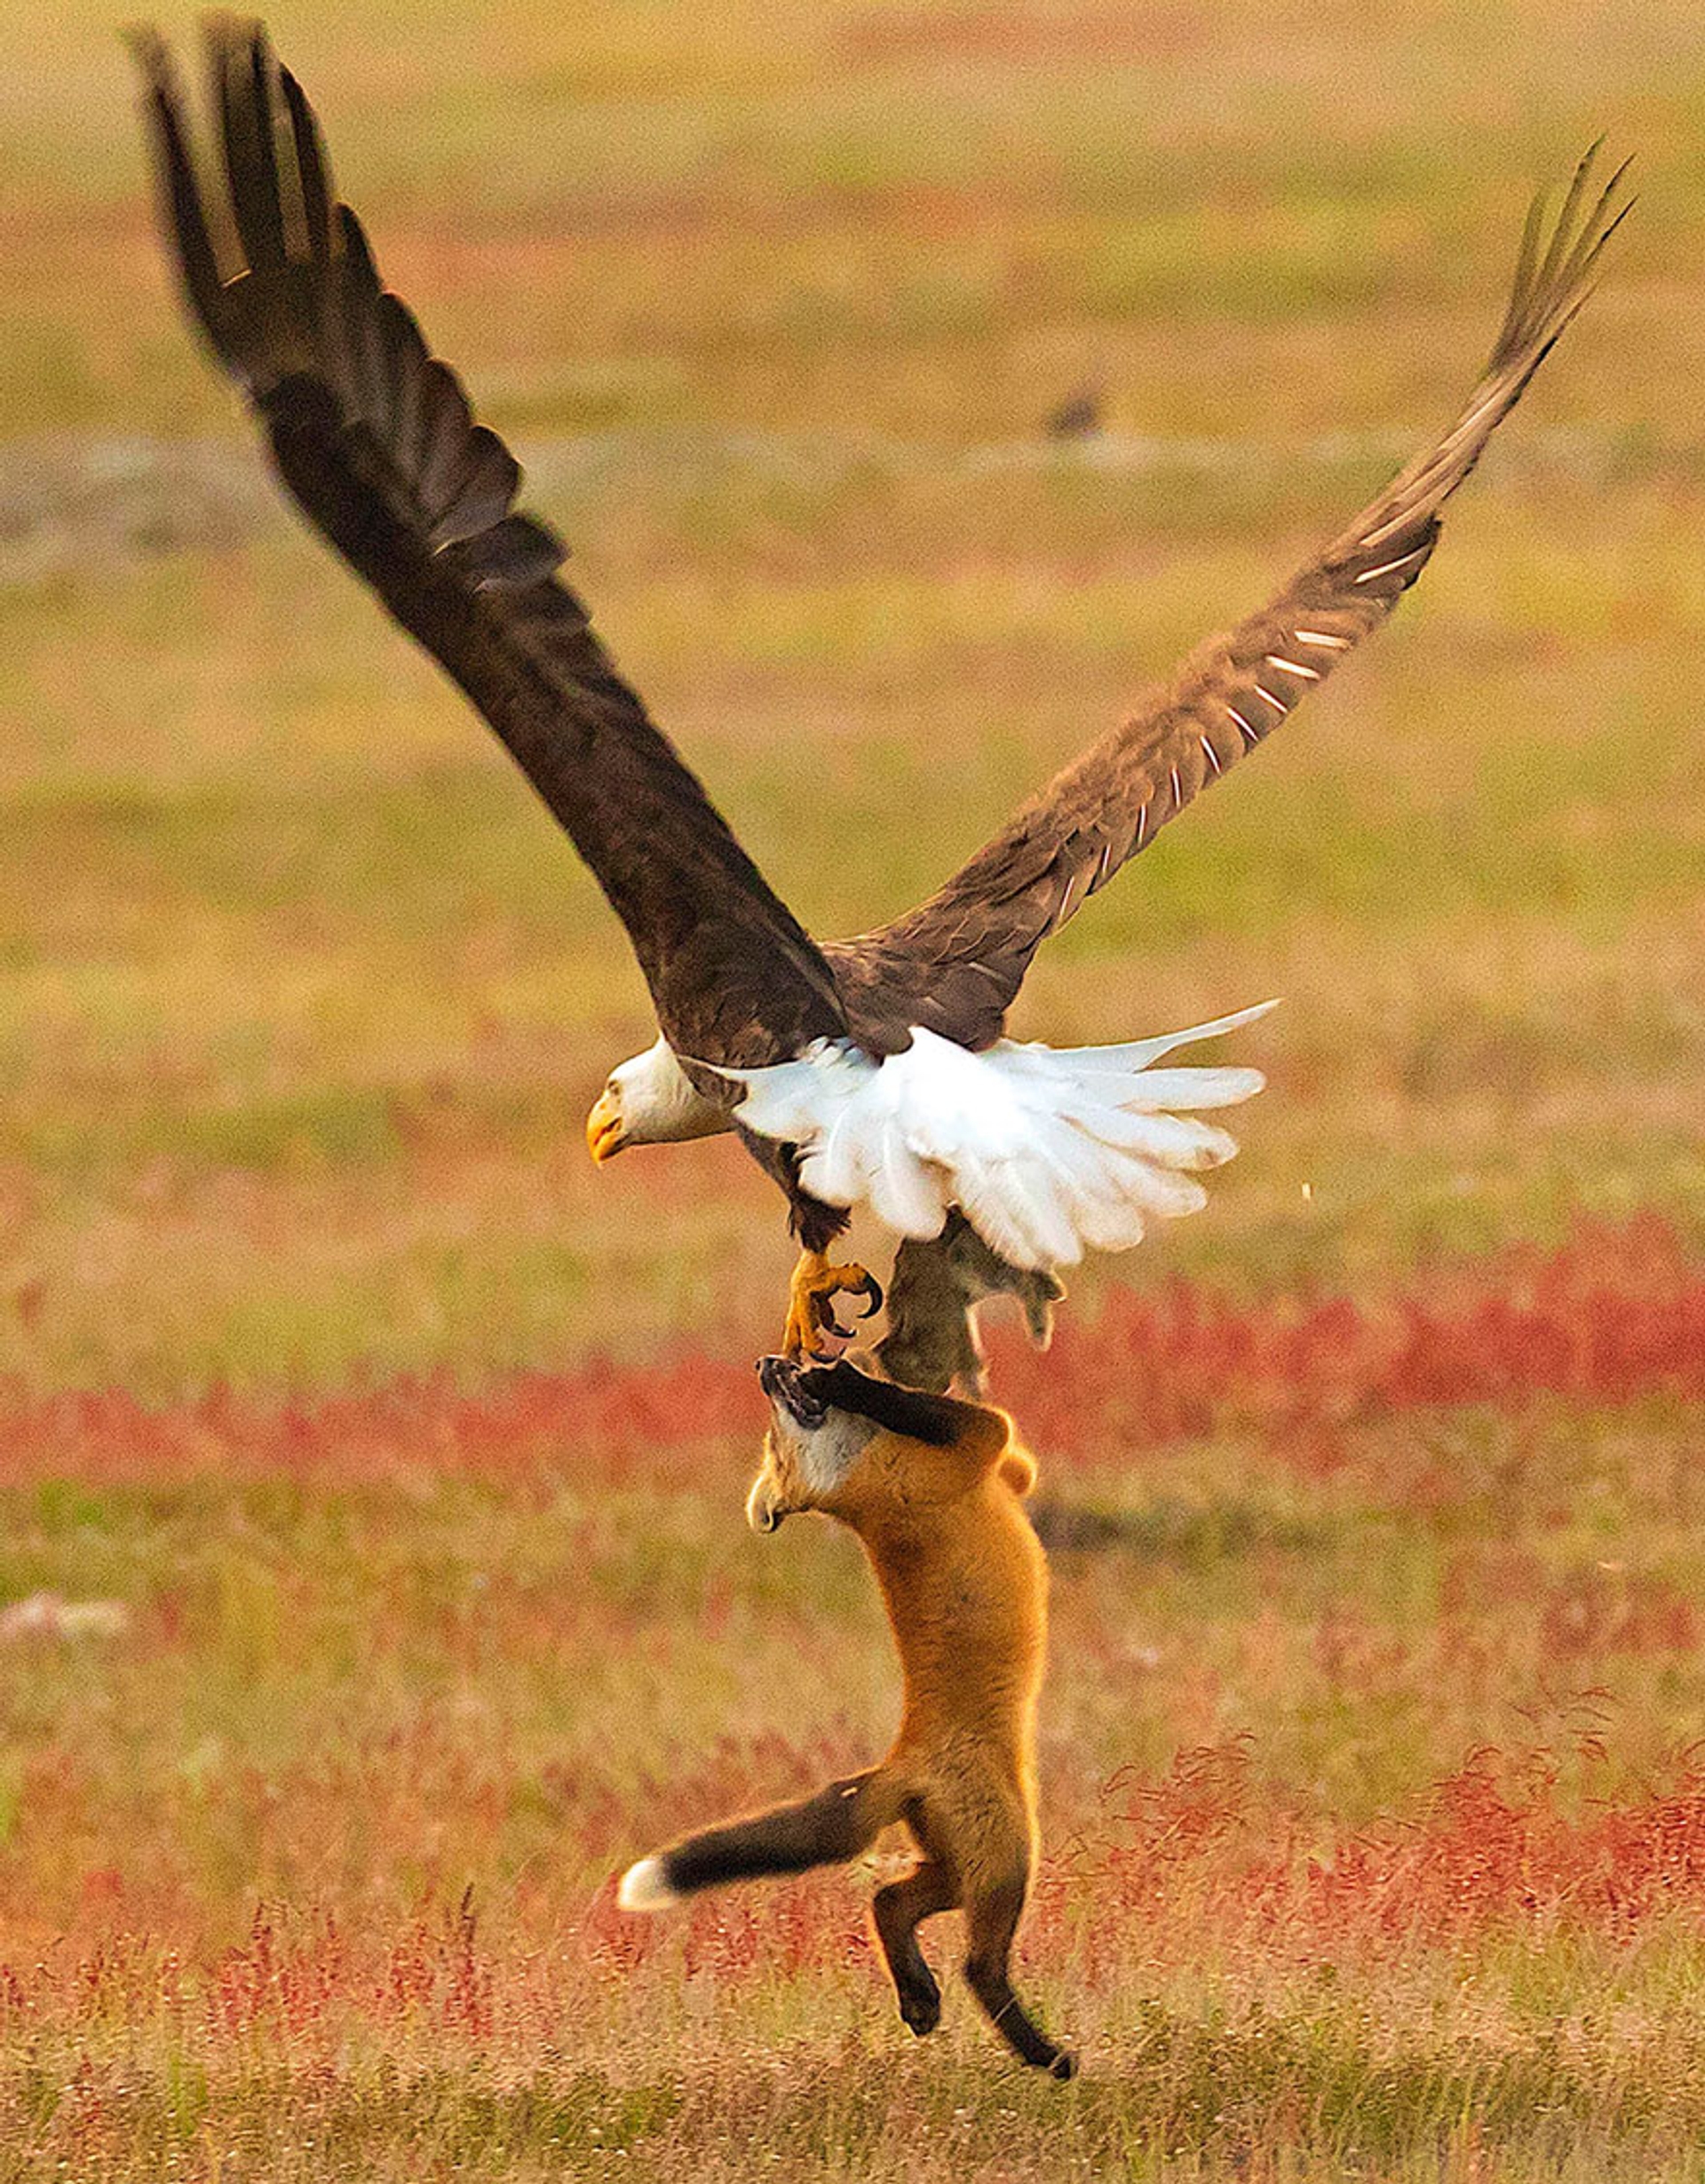 5b07de91df2e4-wildlife-photography-eagle-fox-fighting-over-rabbit-kevin-ebi-9-5b0661f5347b7__880